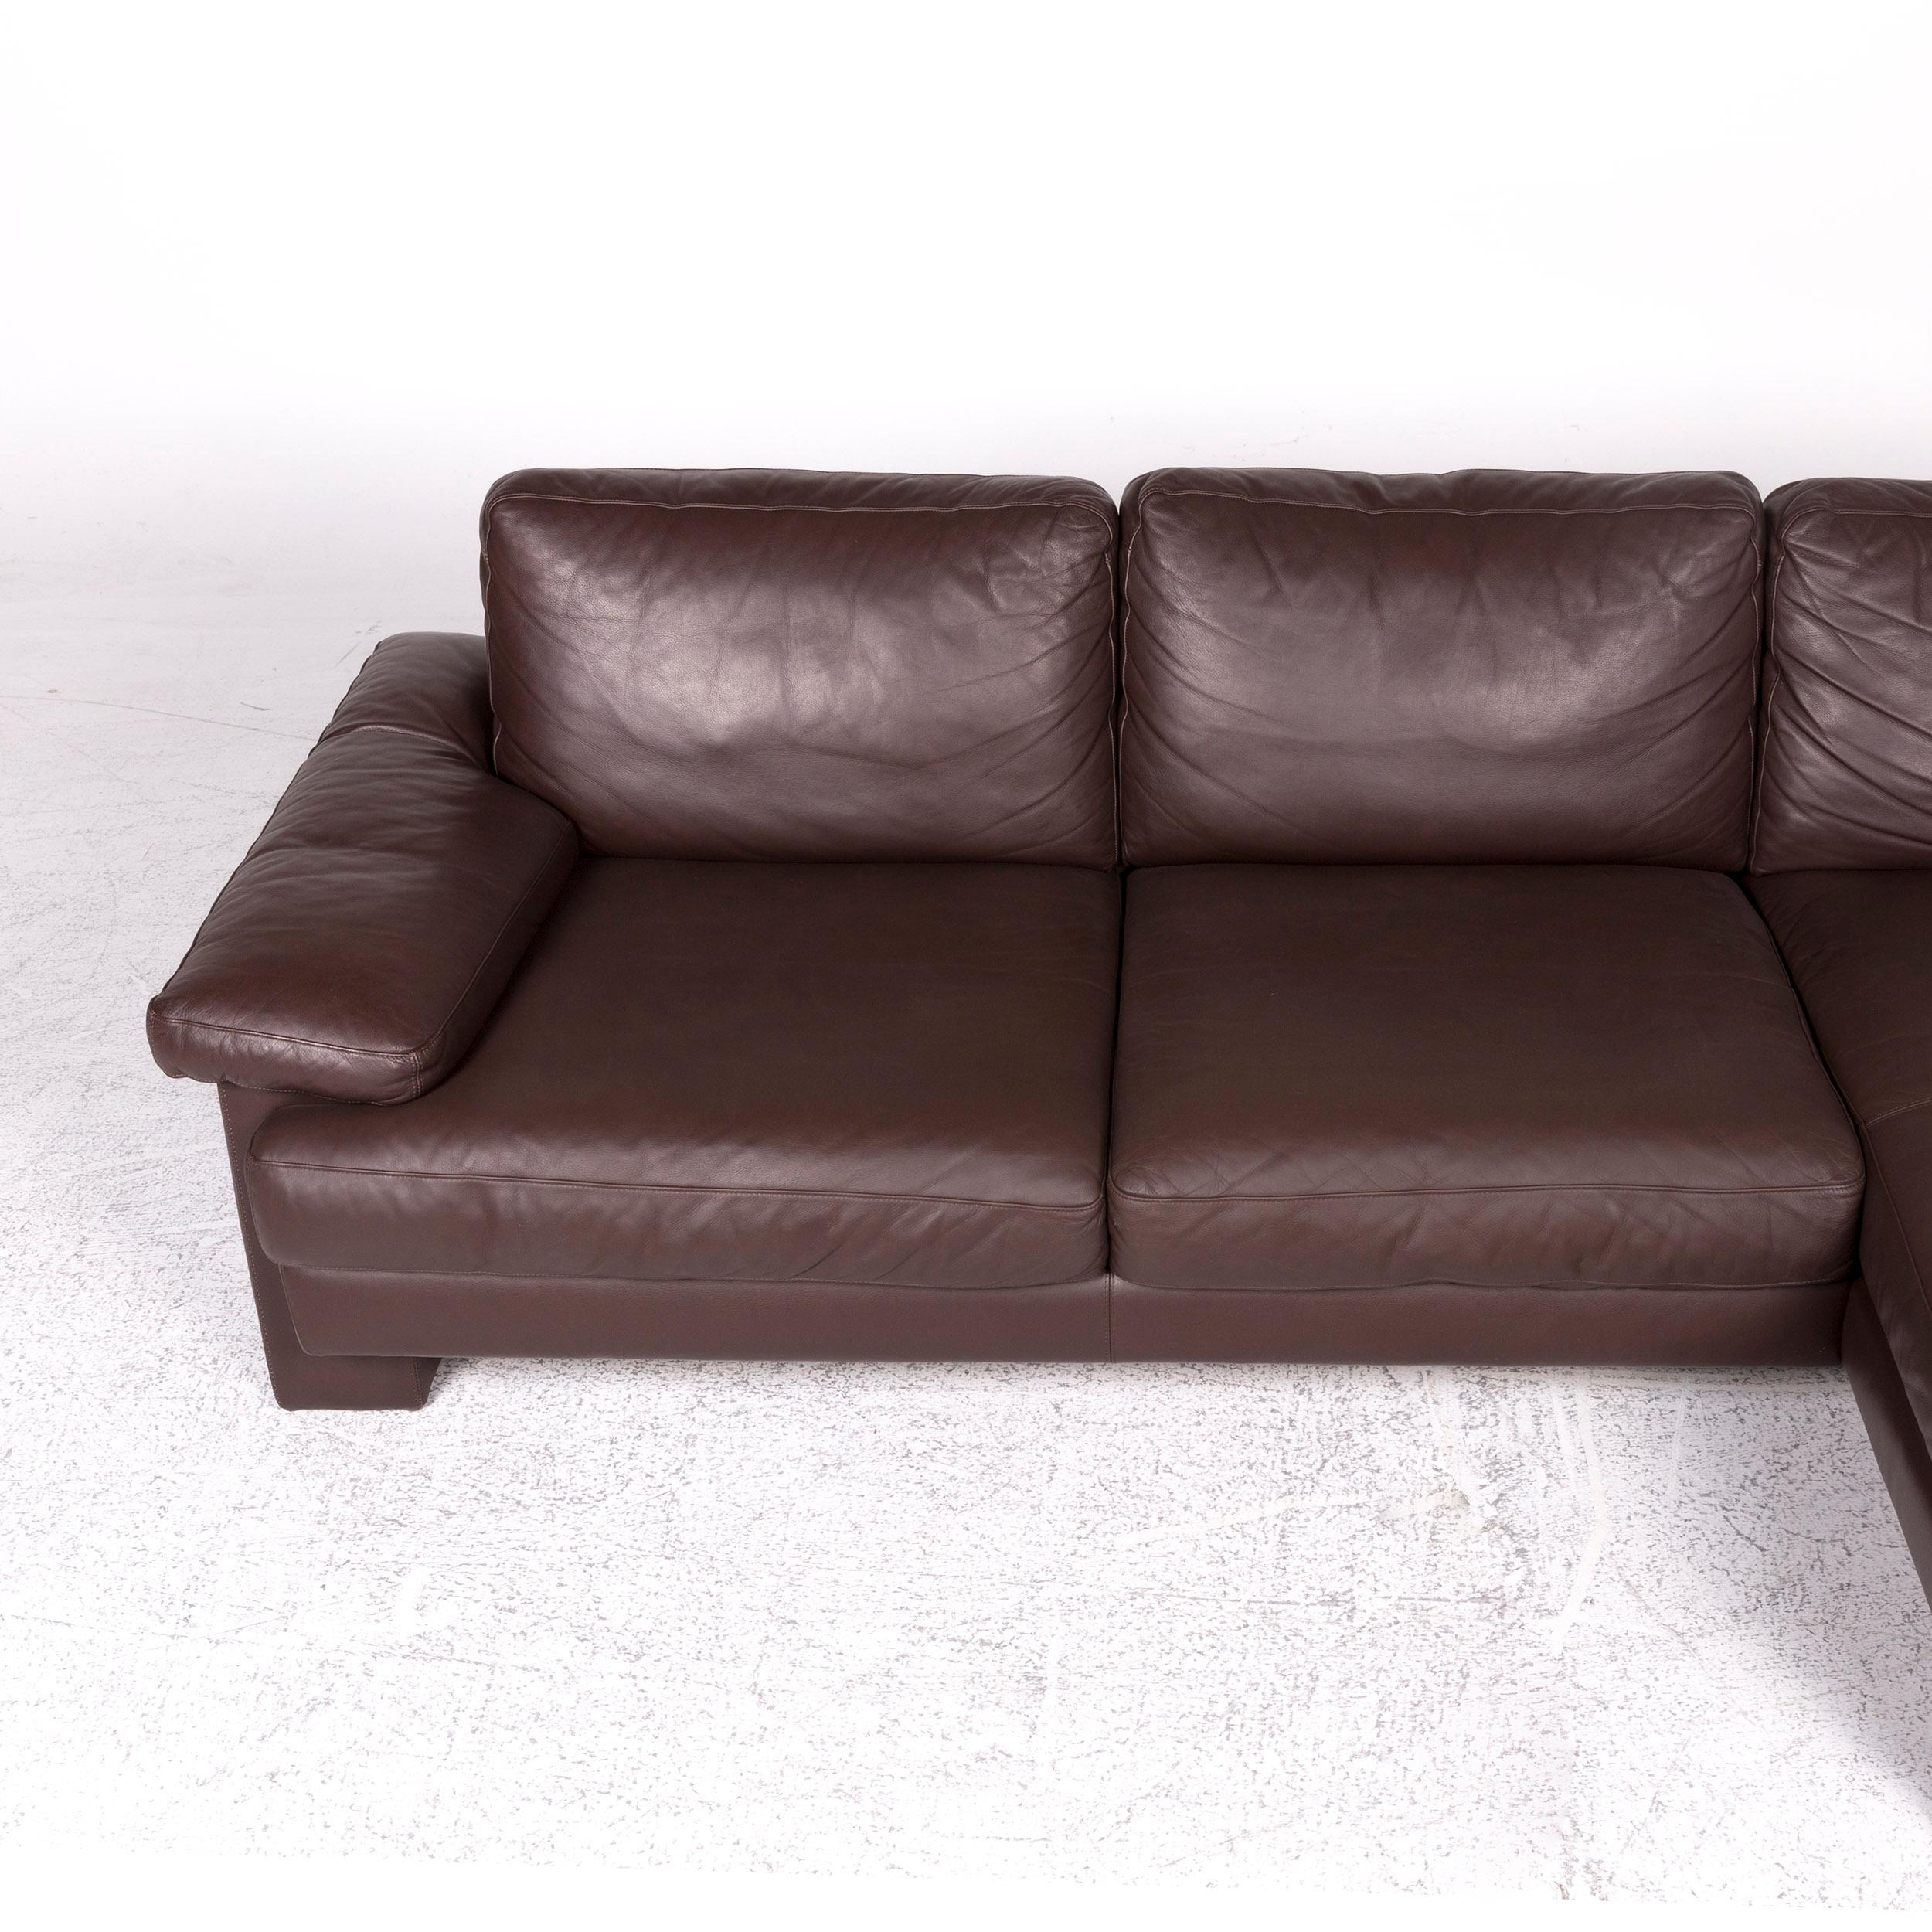 Machalke Leather Corner Sofa Brown Sofa Couch 2